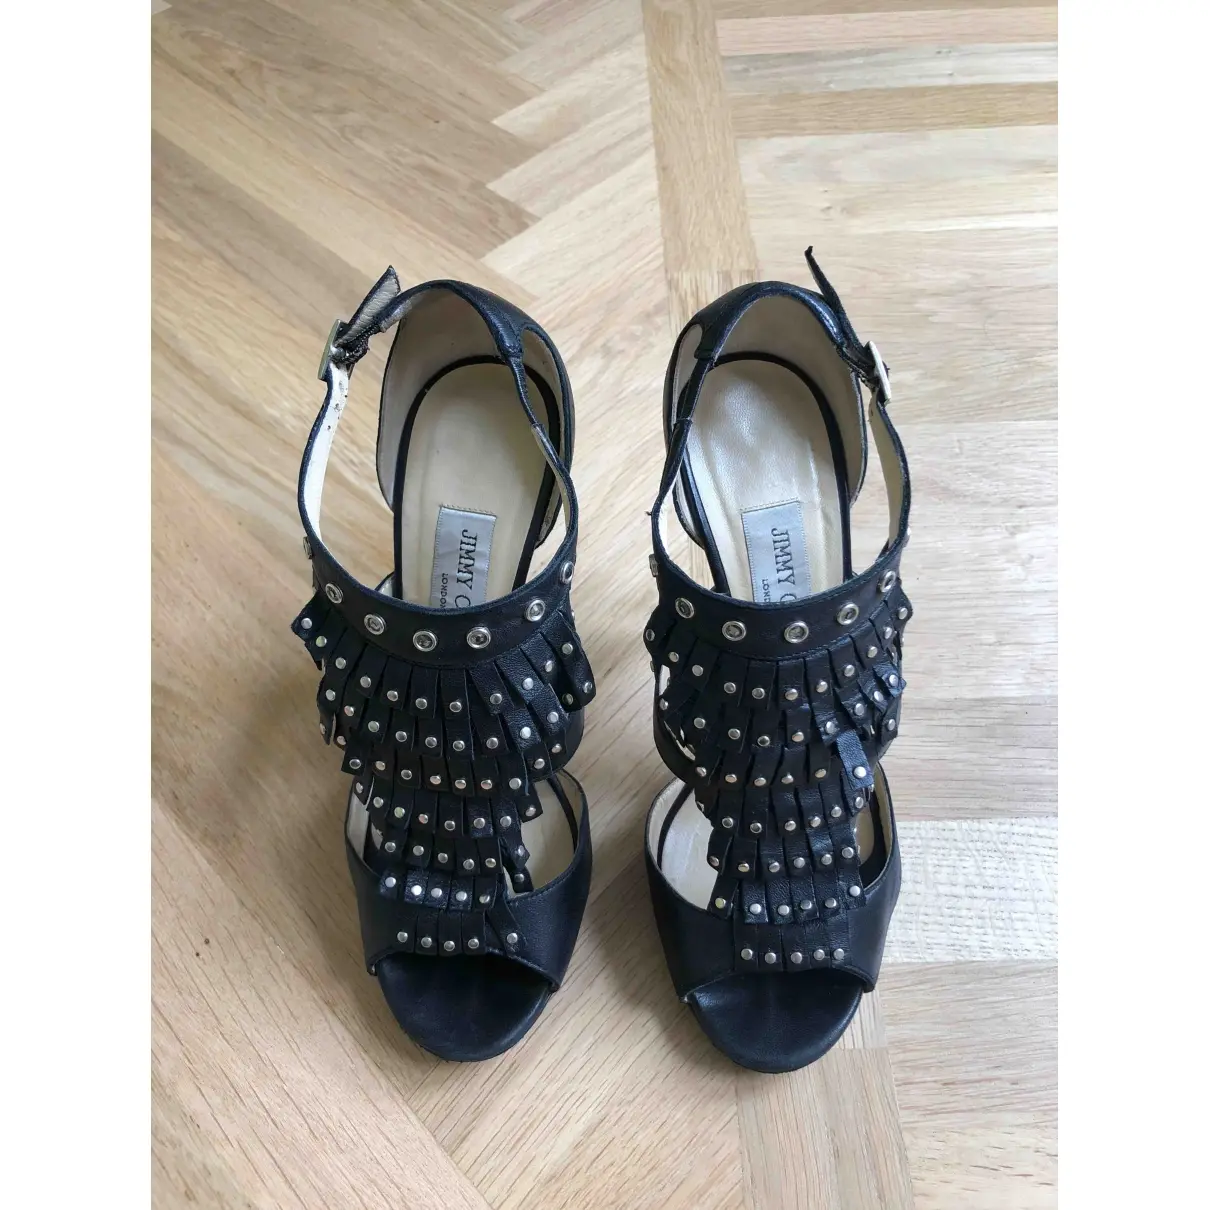 Jimmy Choo Leather heels for sale